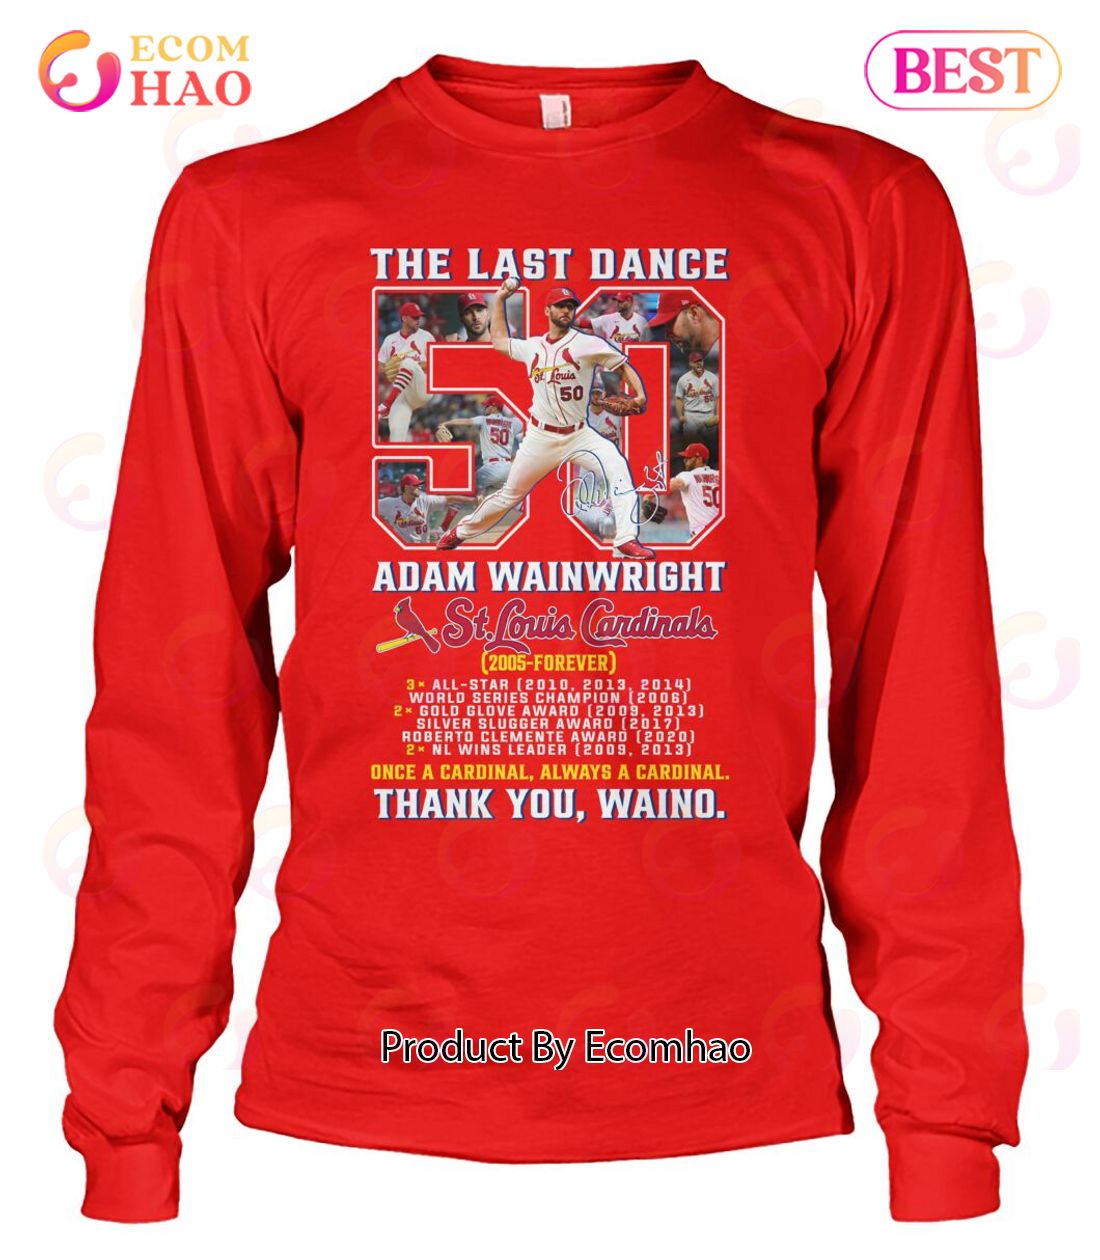 The Last Dance Adam Wainwright St. Louis Cardinals 2005 – Forever